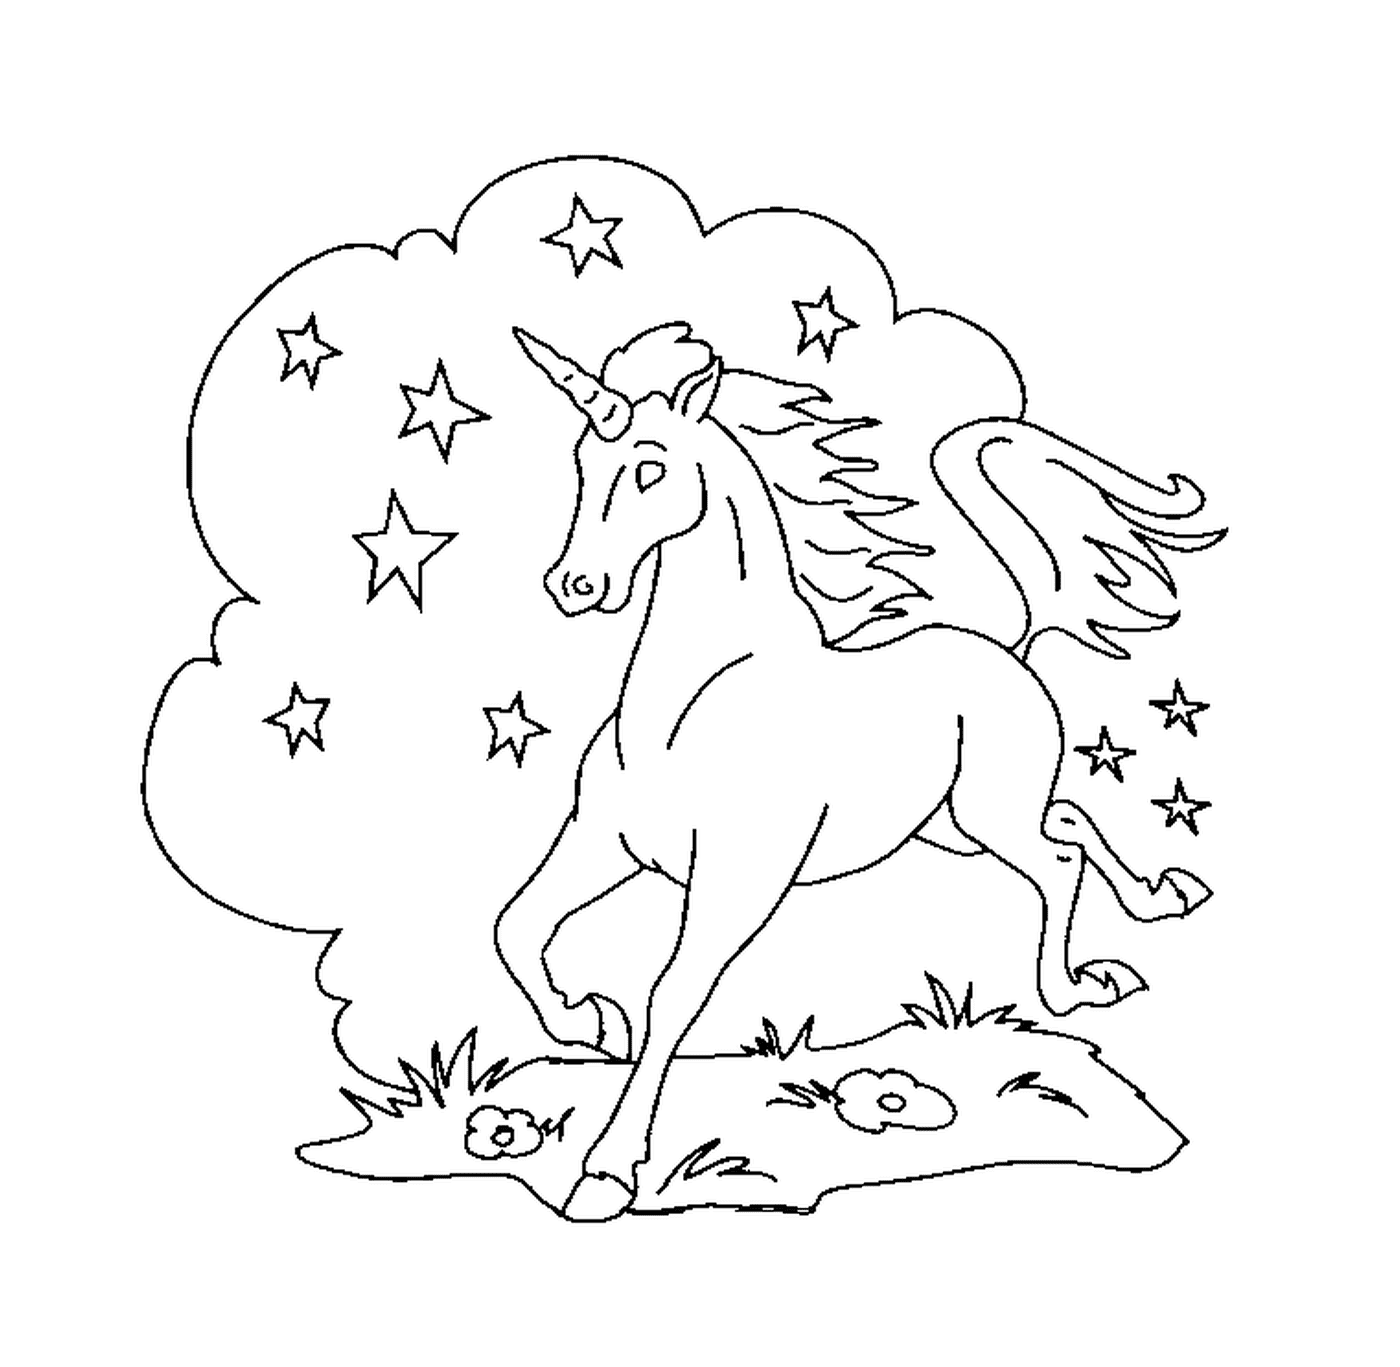  unicorn in a cloud of stars 